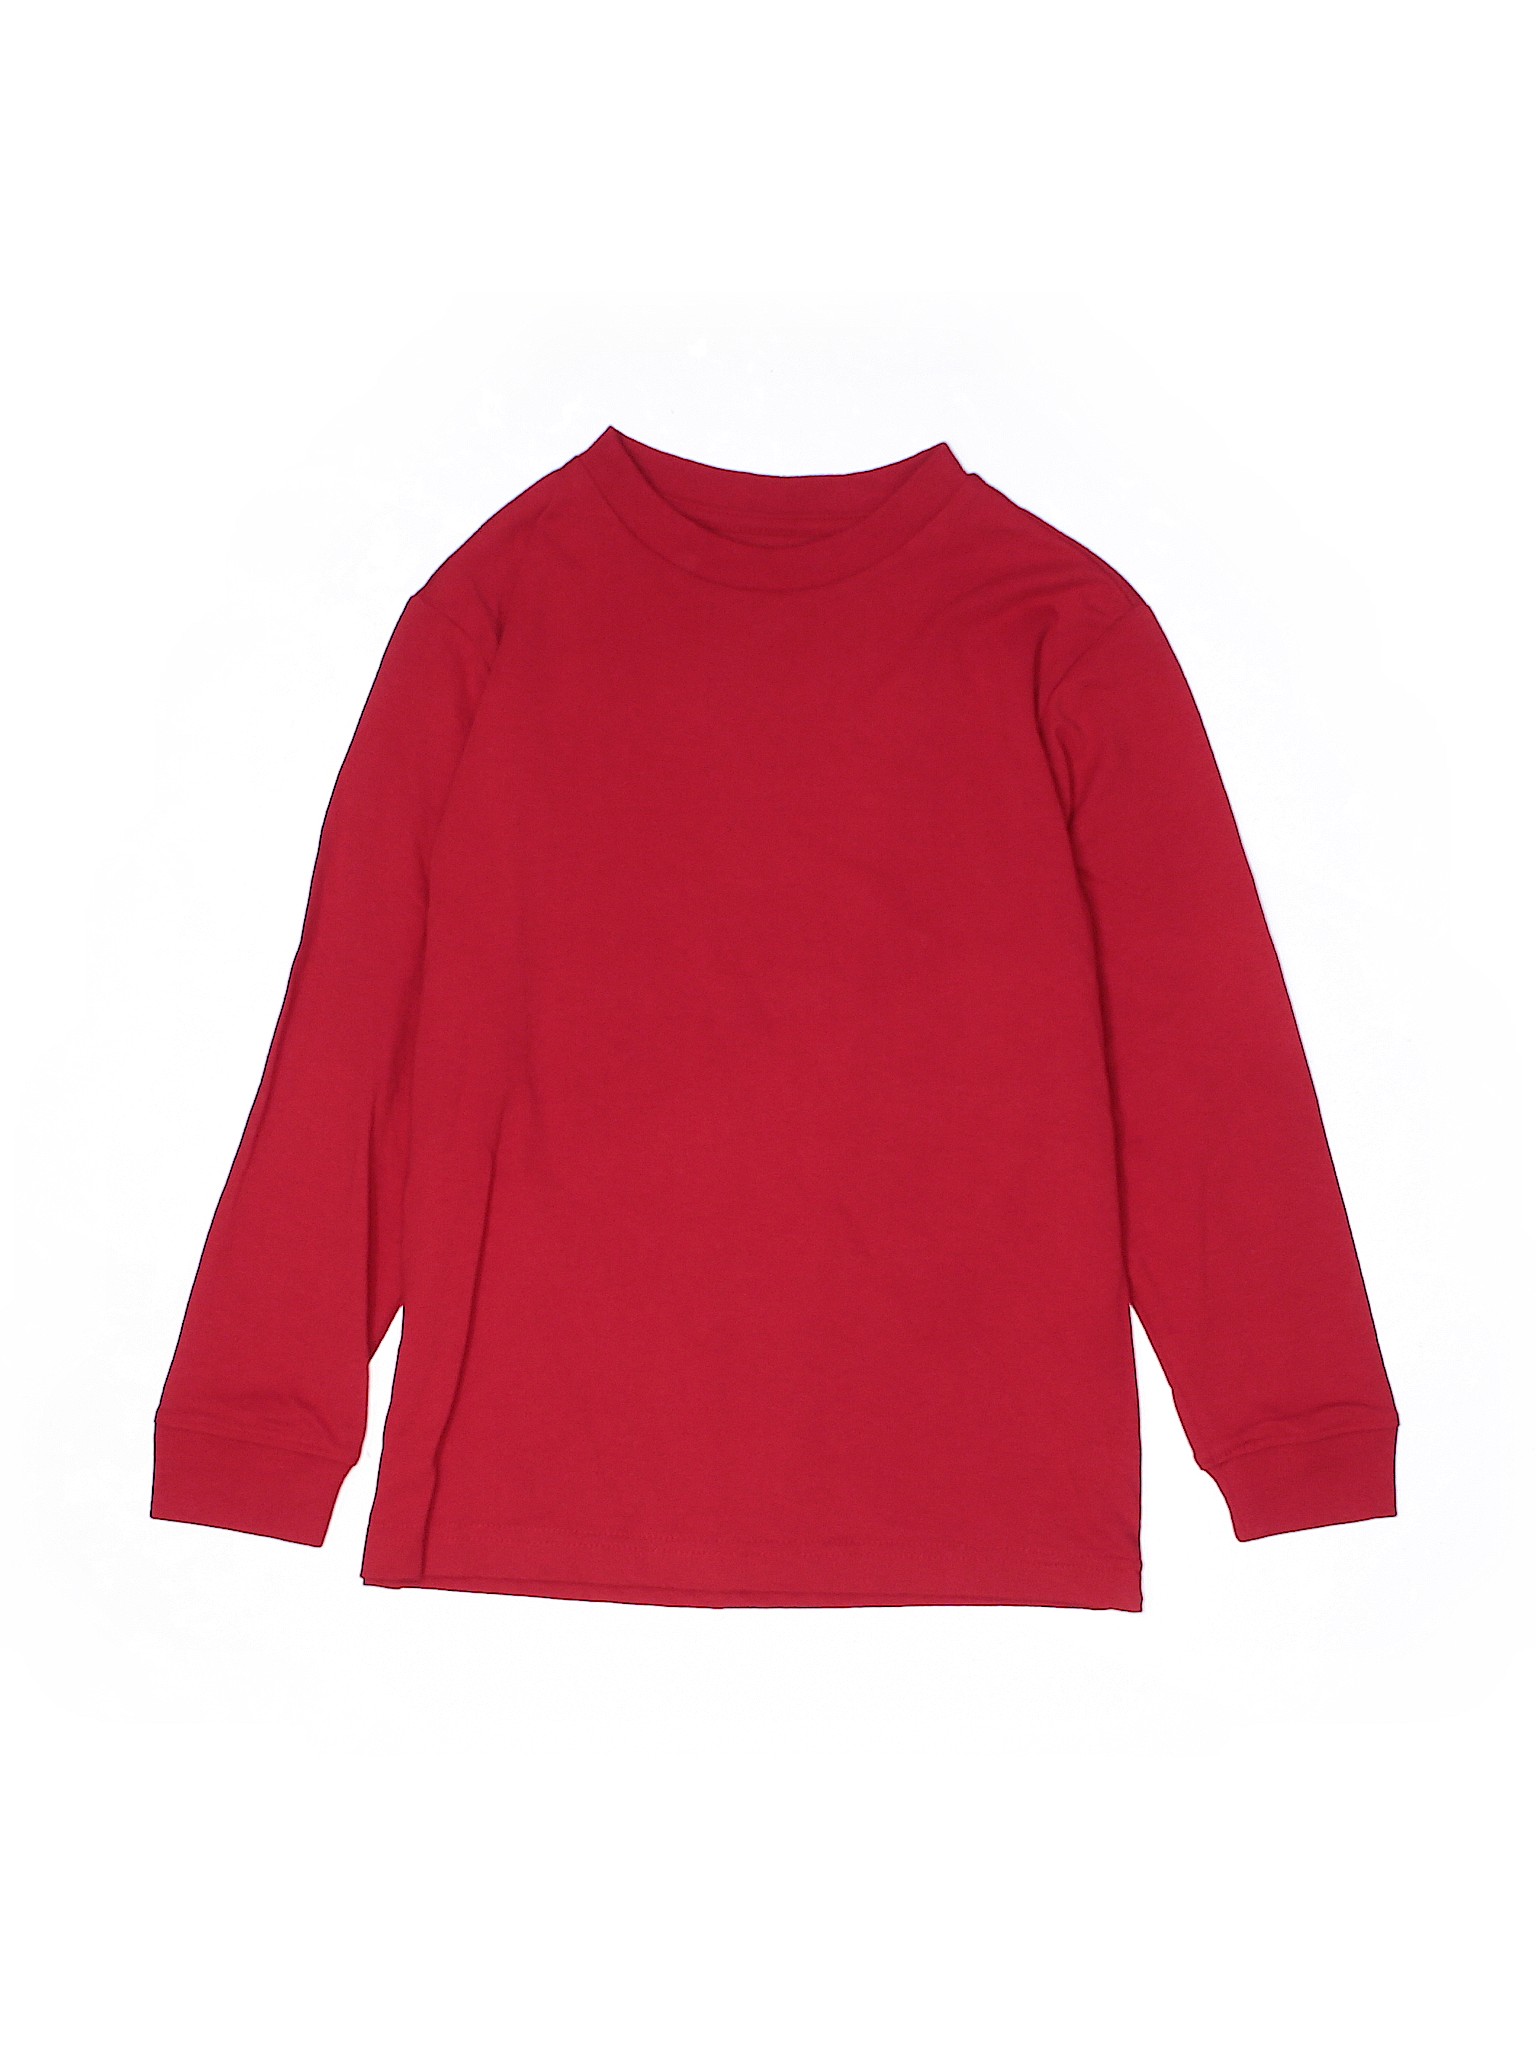 Old Navy Boys Red Long Sleeve T-Shirt 6 | eBay